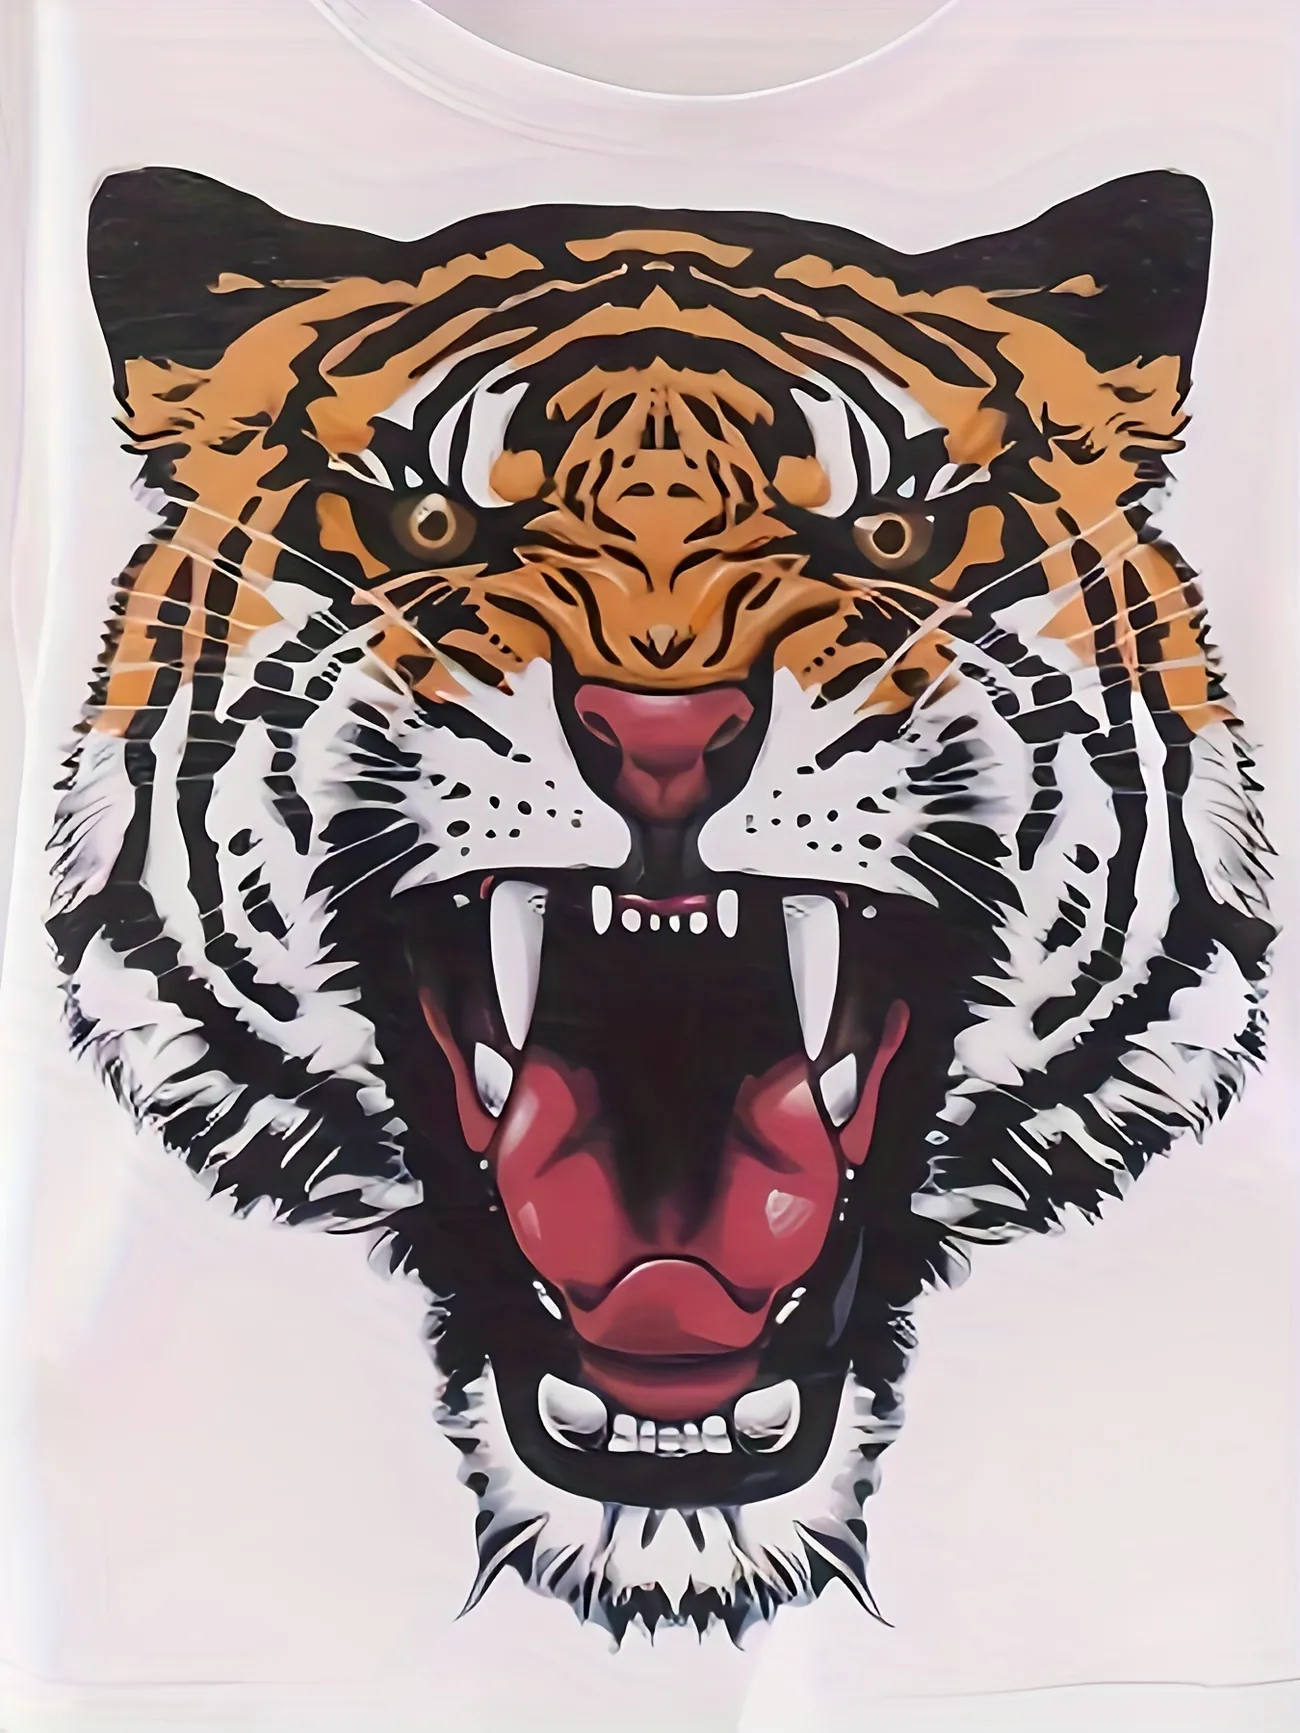 creative tiger t shirt design